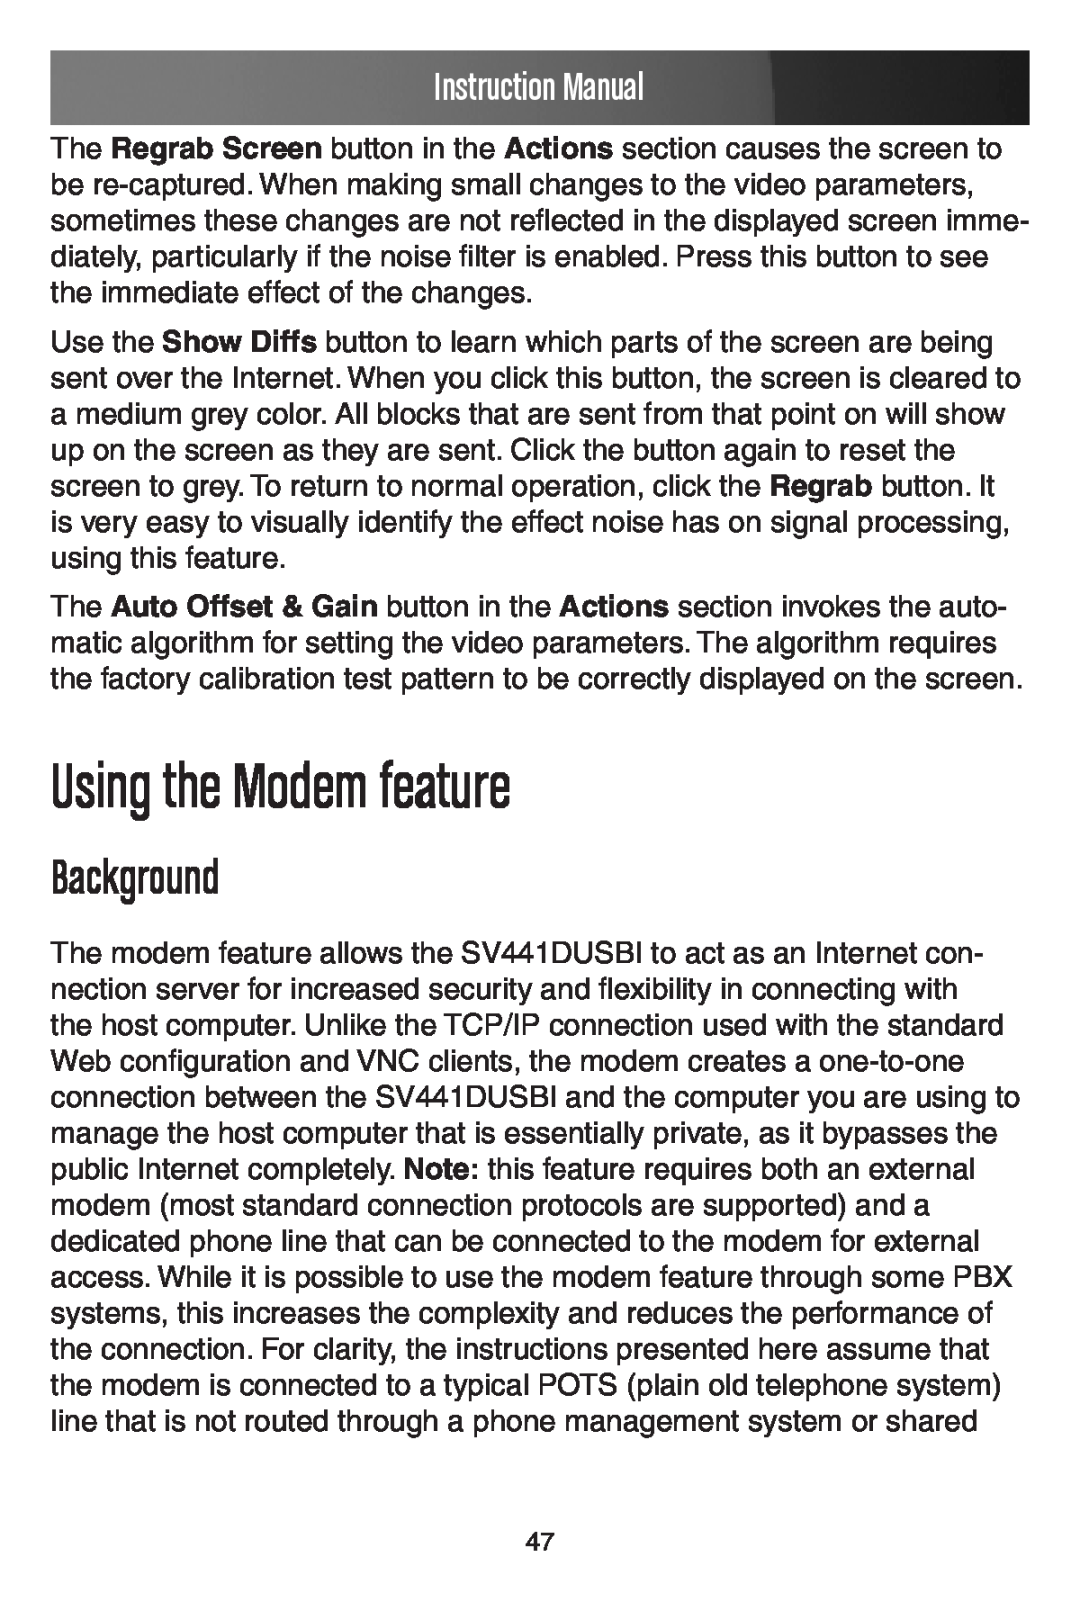 StarTech.com SV441DUSBI instruction manual Using the Modem feature, Background, Instruction Manual 